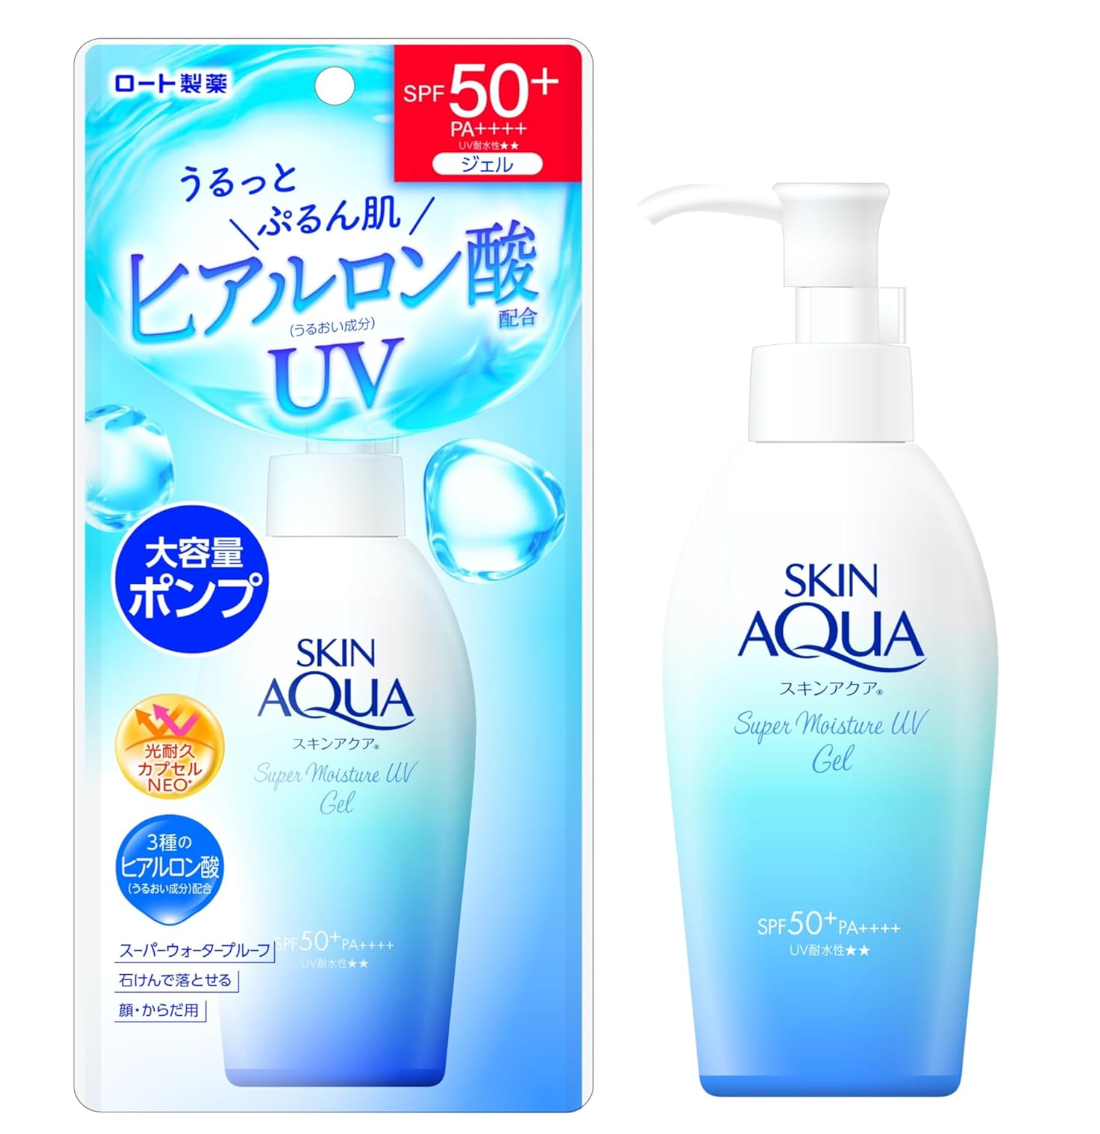 Skin Aqua Super Moisture Gel Sunscreen SPF50+ PA++++ 140g